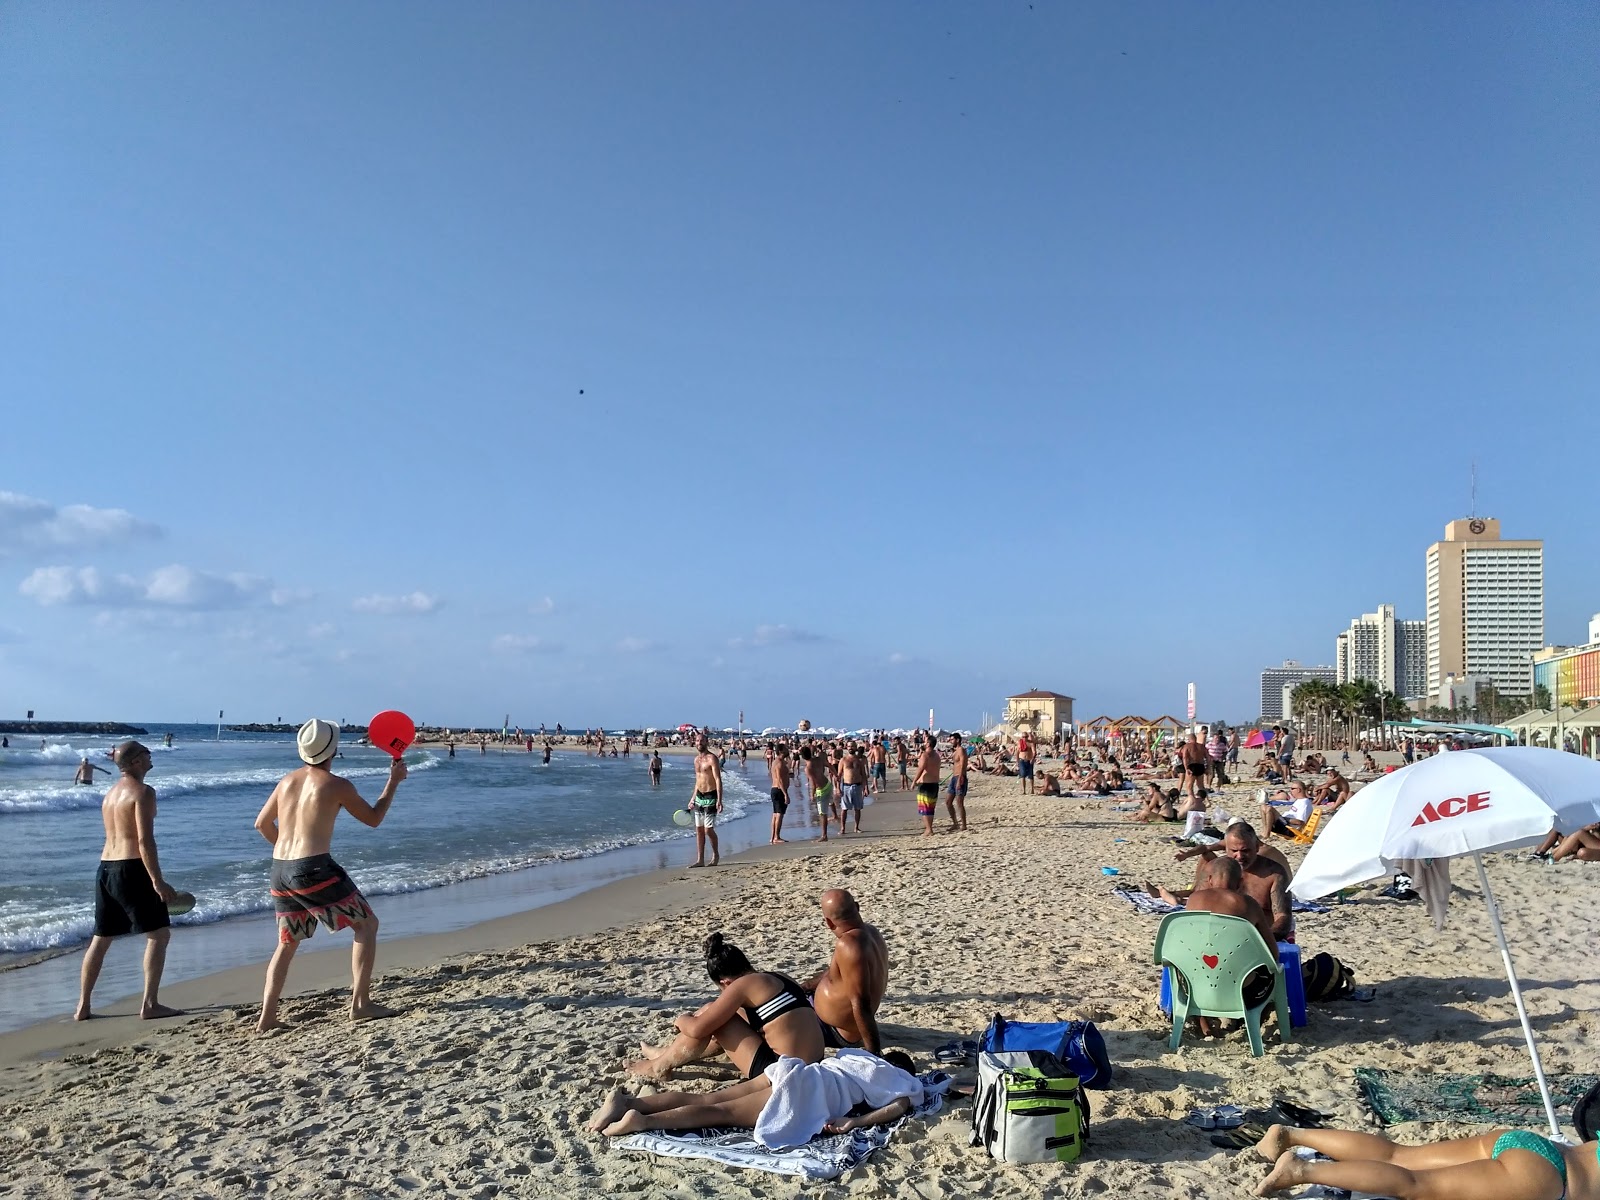 Foto de Tel Aviv beach - recomendado para viajeros en familia con niños